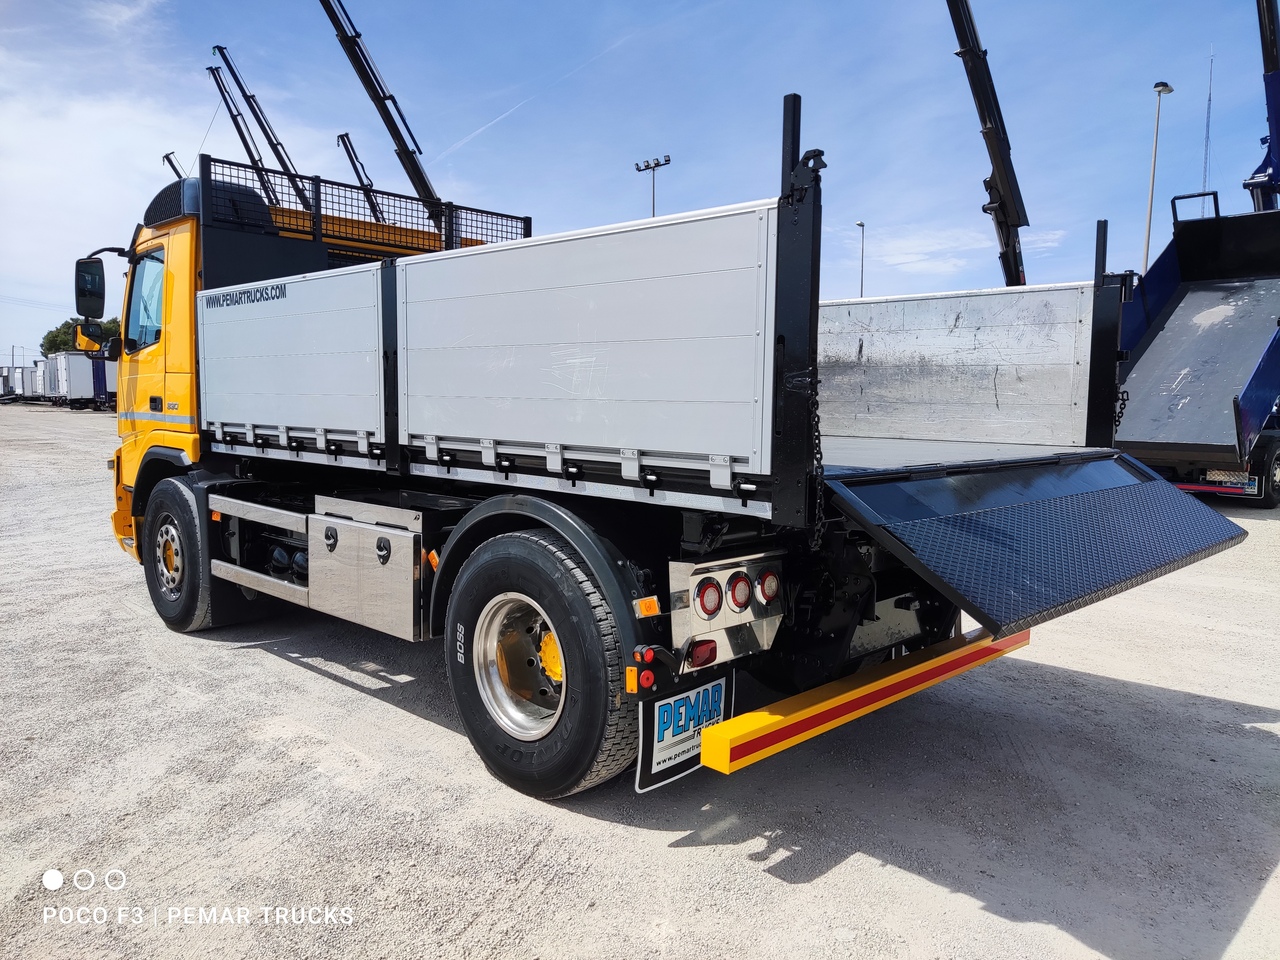 Tipper VOLVO FMX 330 BASCULANTE / VOLQUETE 18T, 48500 EUR - Truck1 ID -  7215913